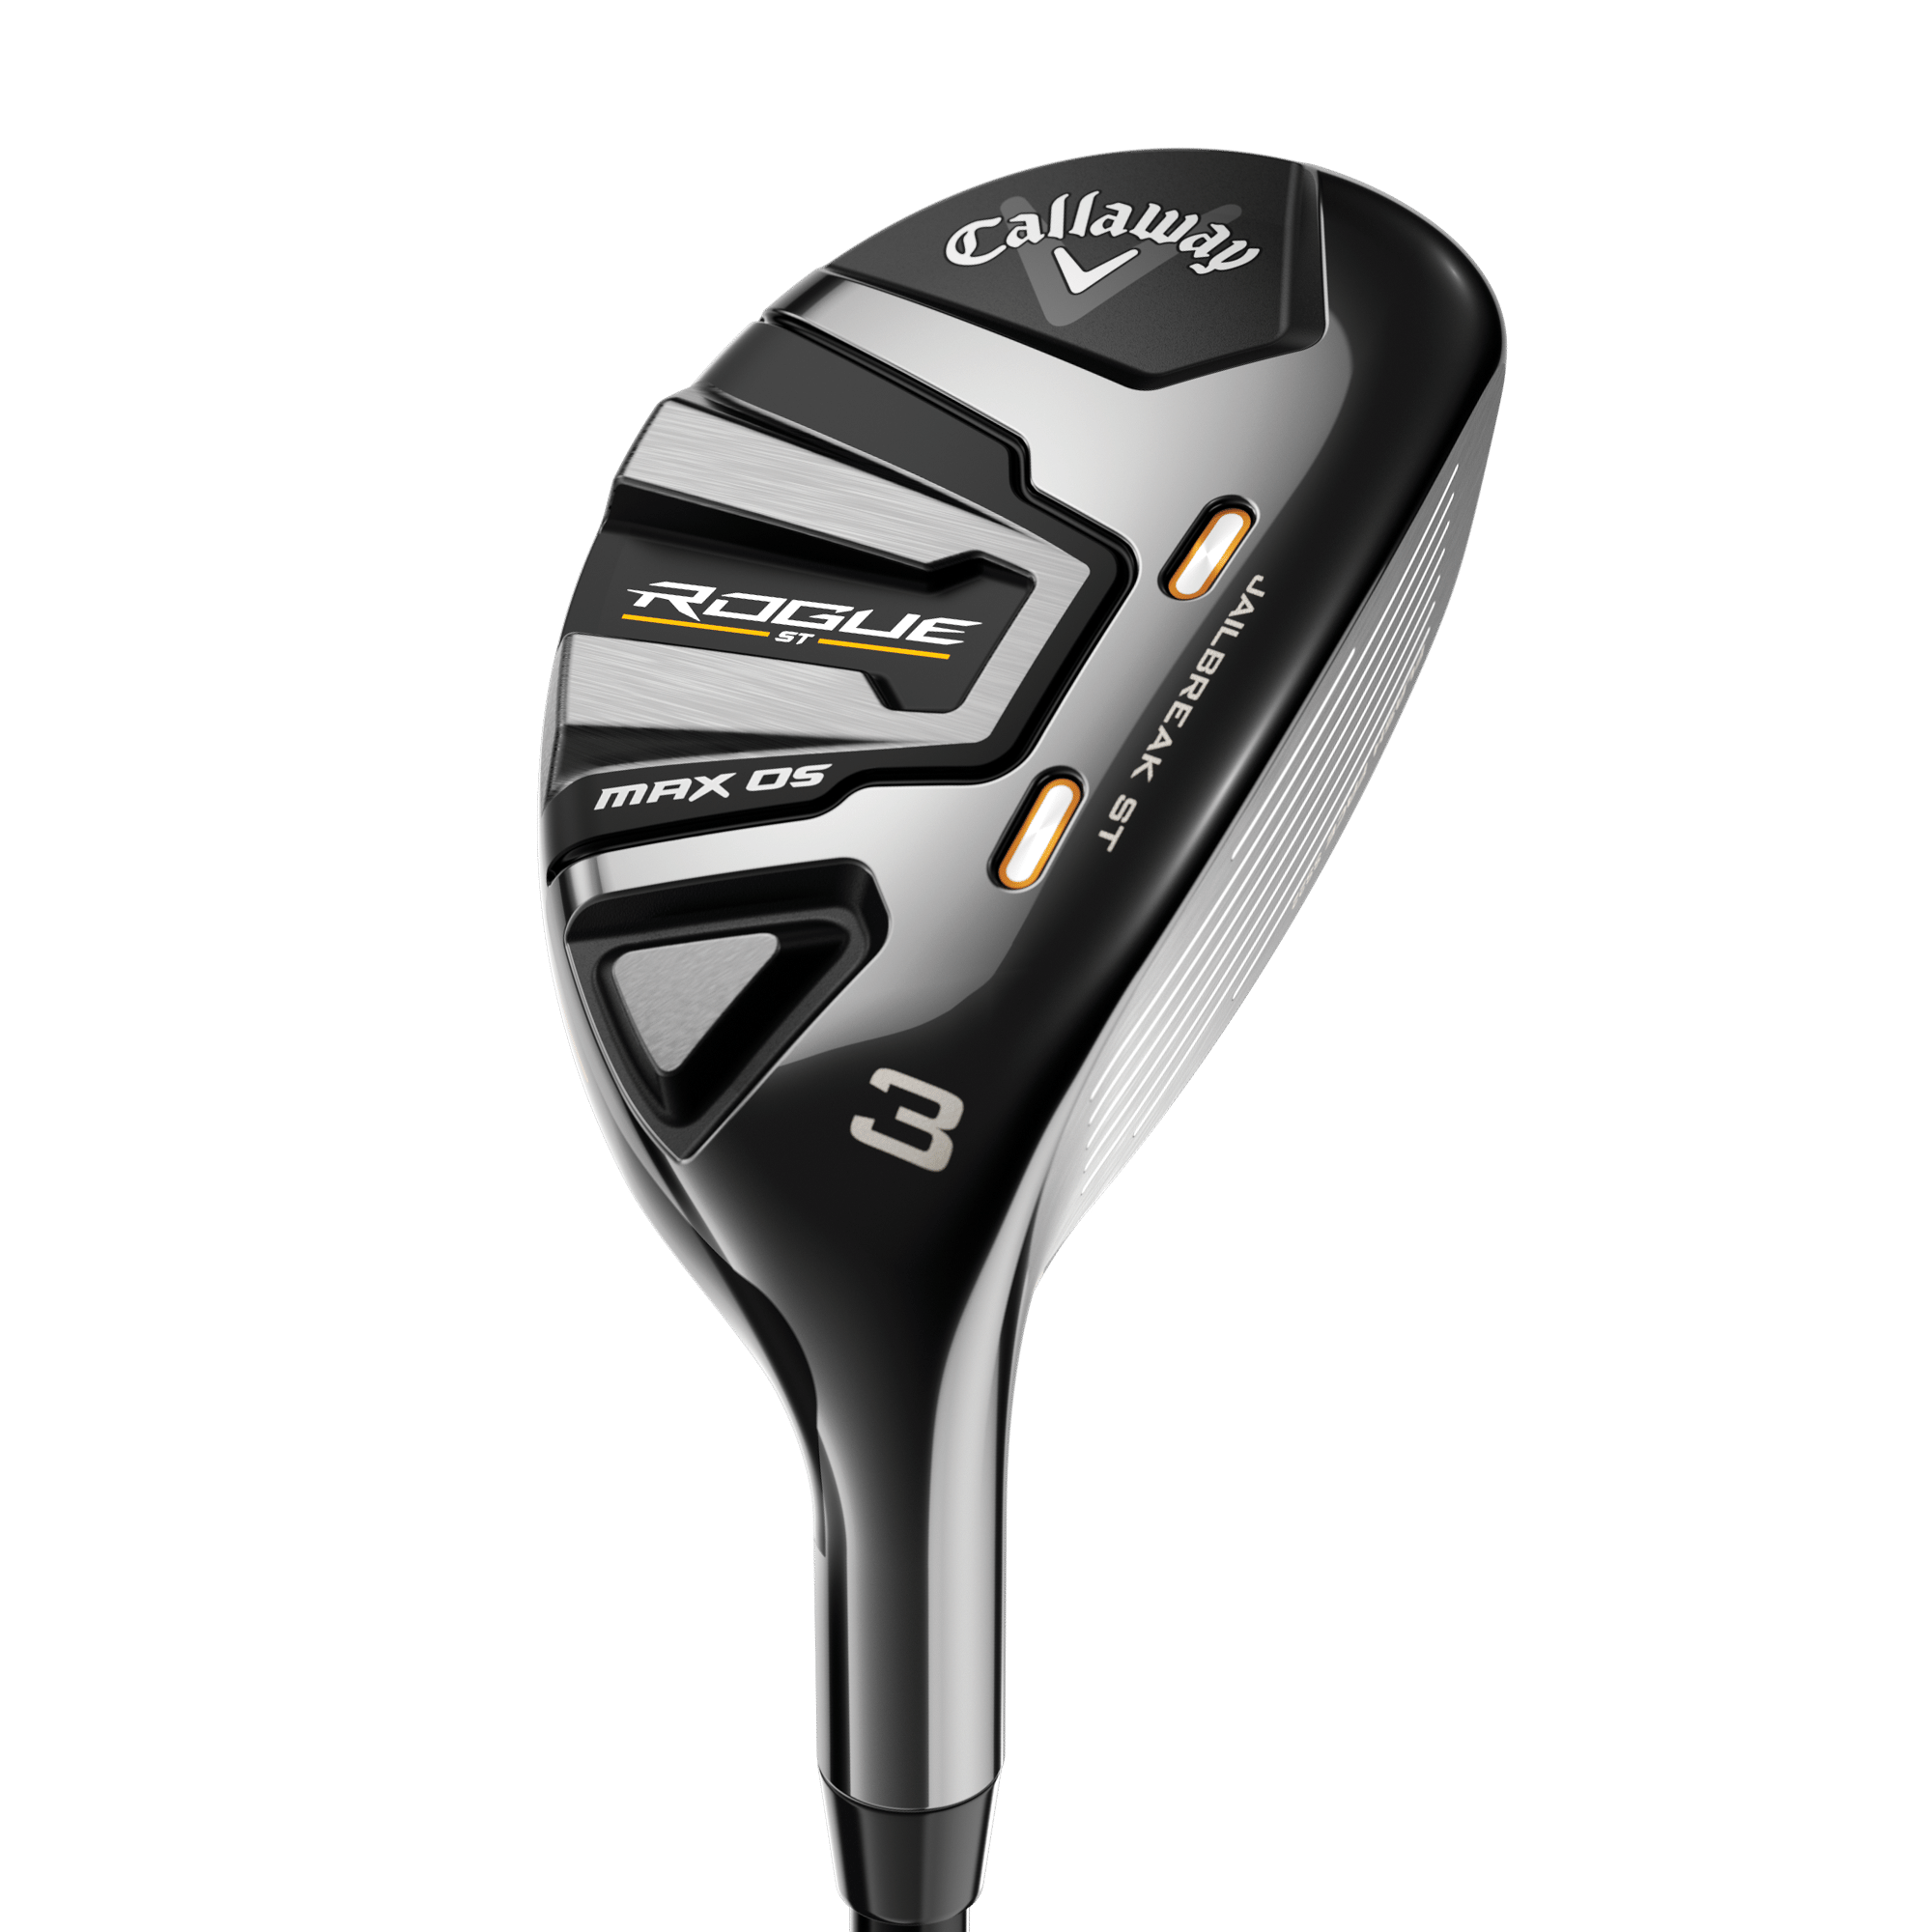 Rogue ST MAX OS Hybrids | Callaway Golf | Specs u0026 Reviews